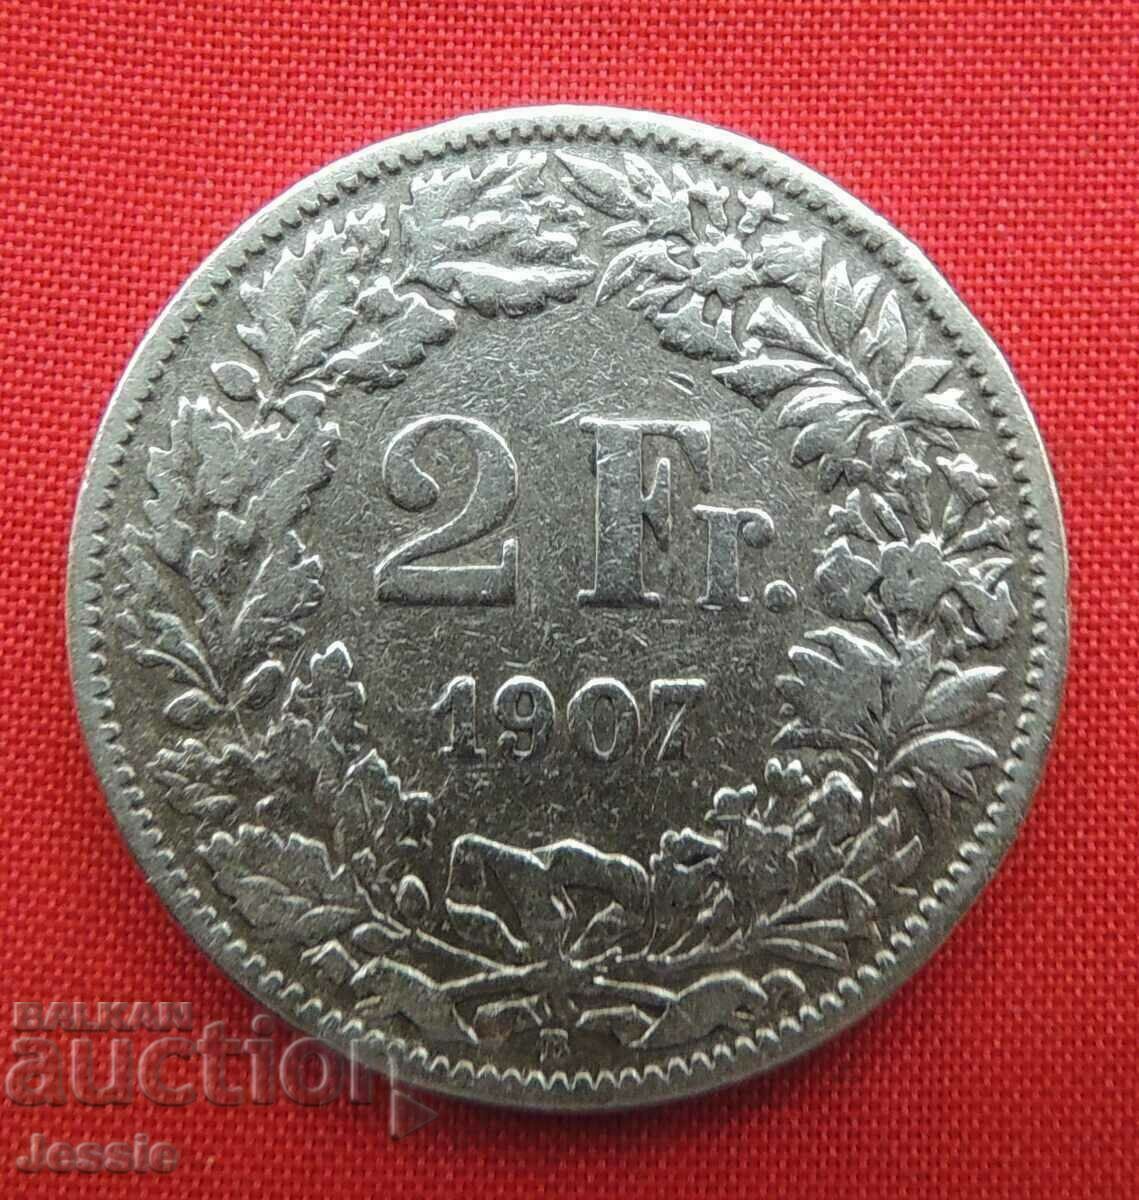 2 Francs 1907 B Switzerland Silver